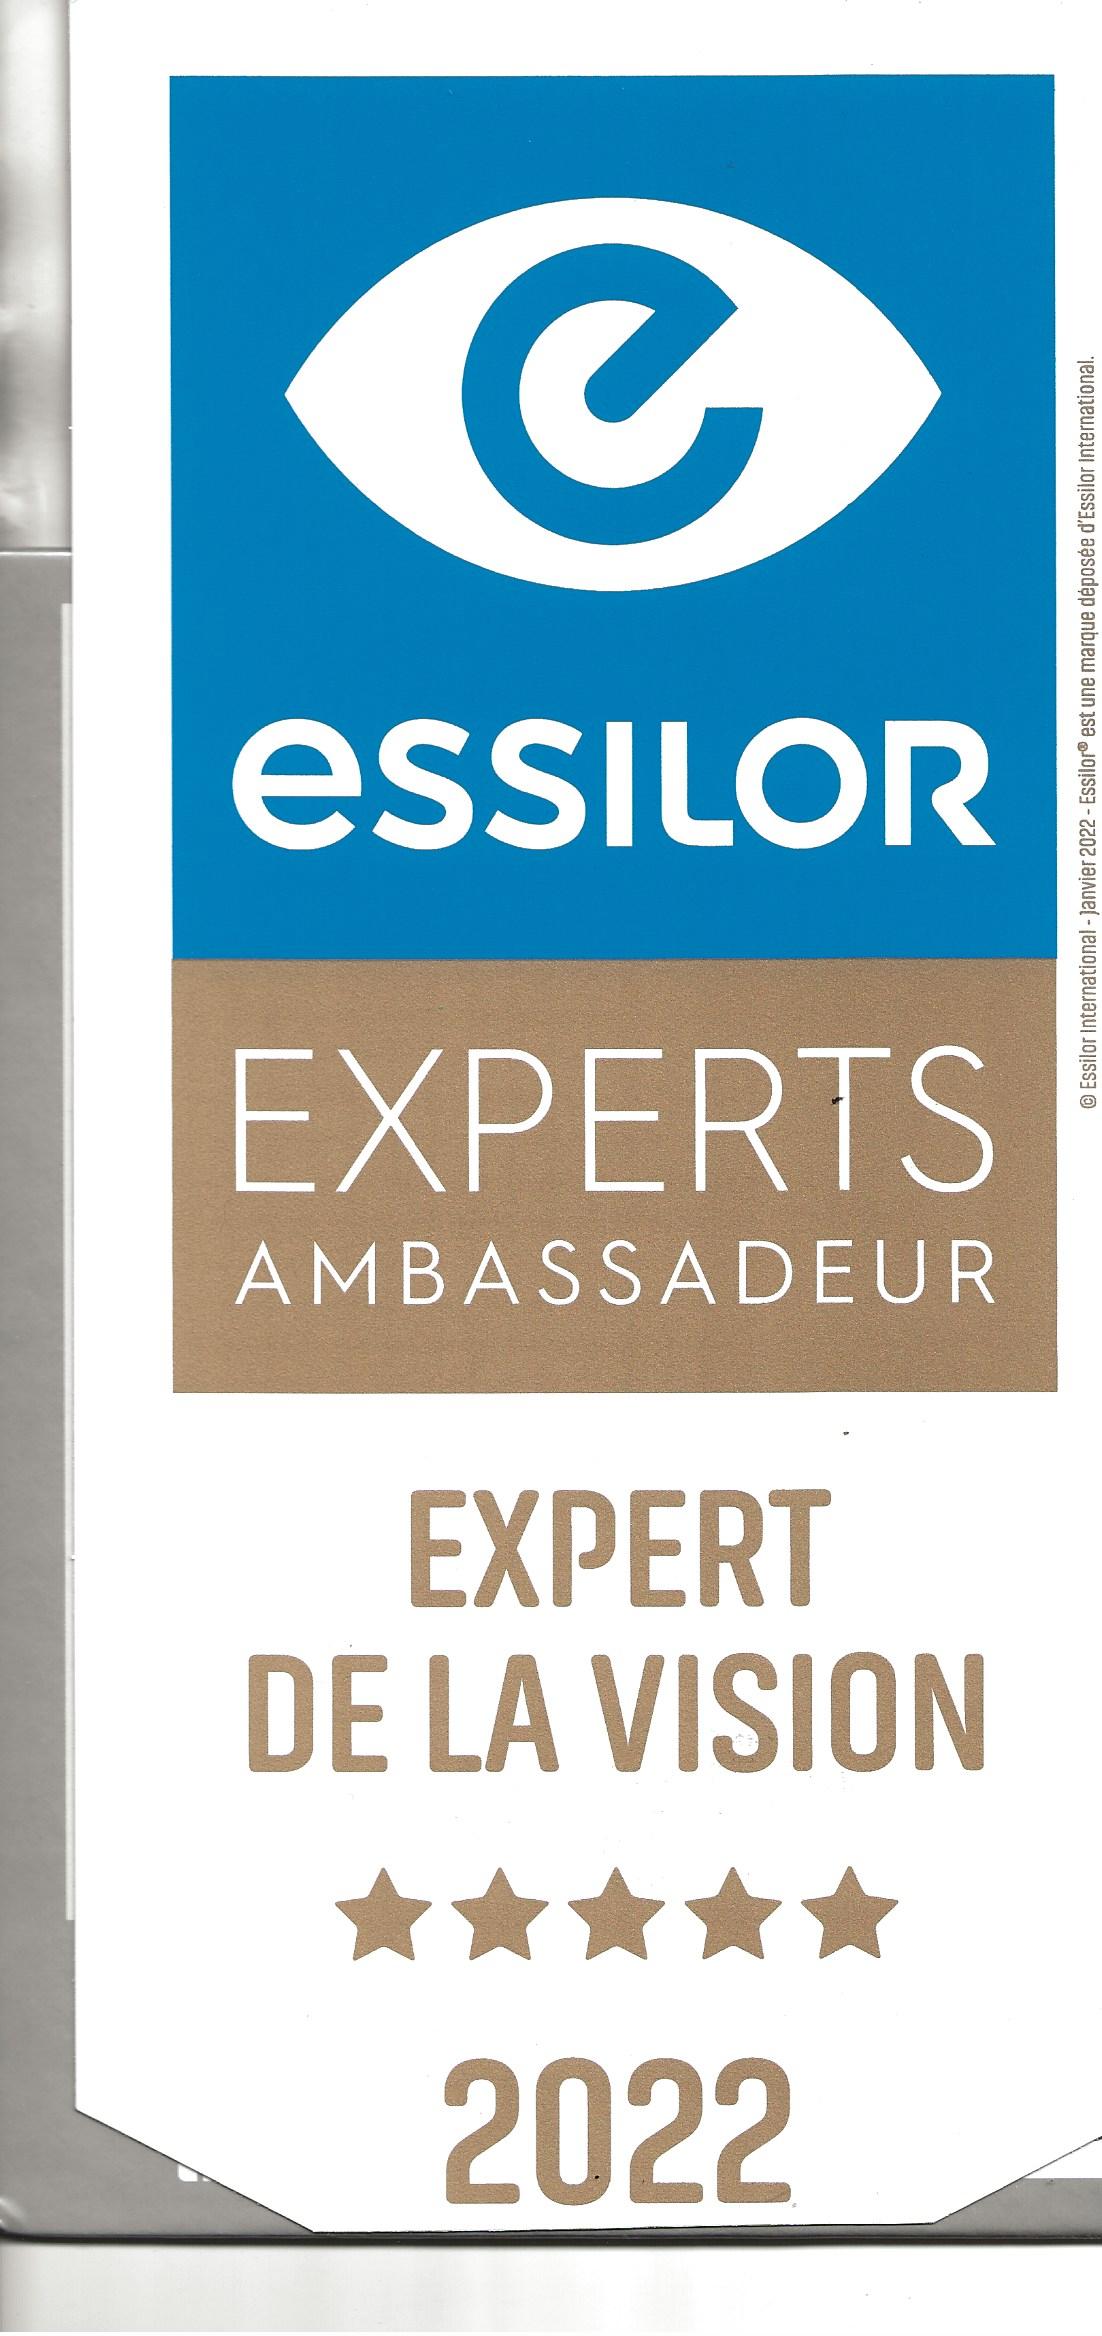 Essilor, experts ambassadeur